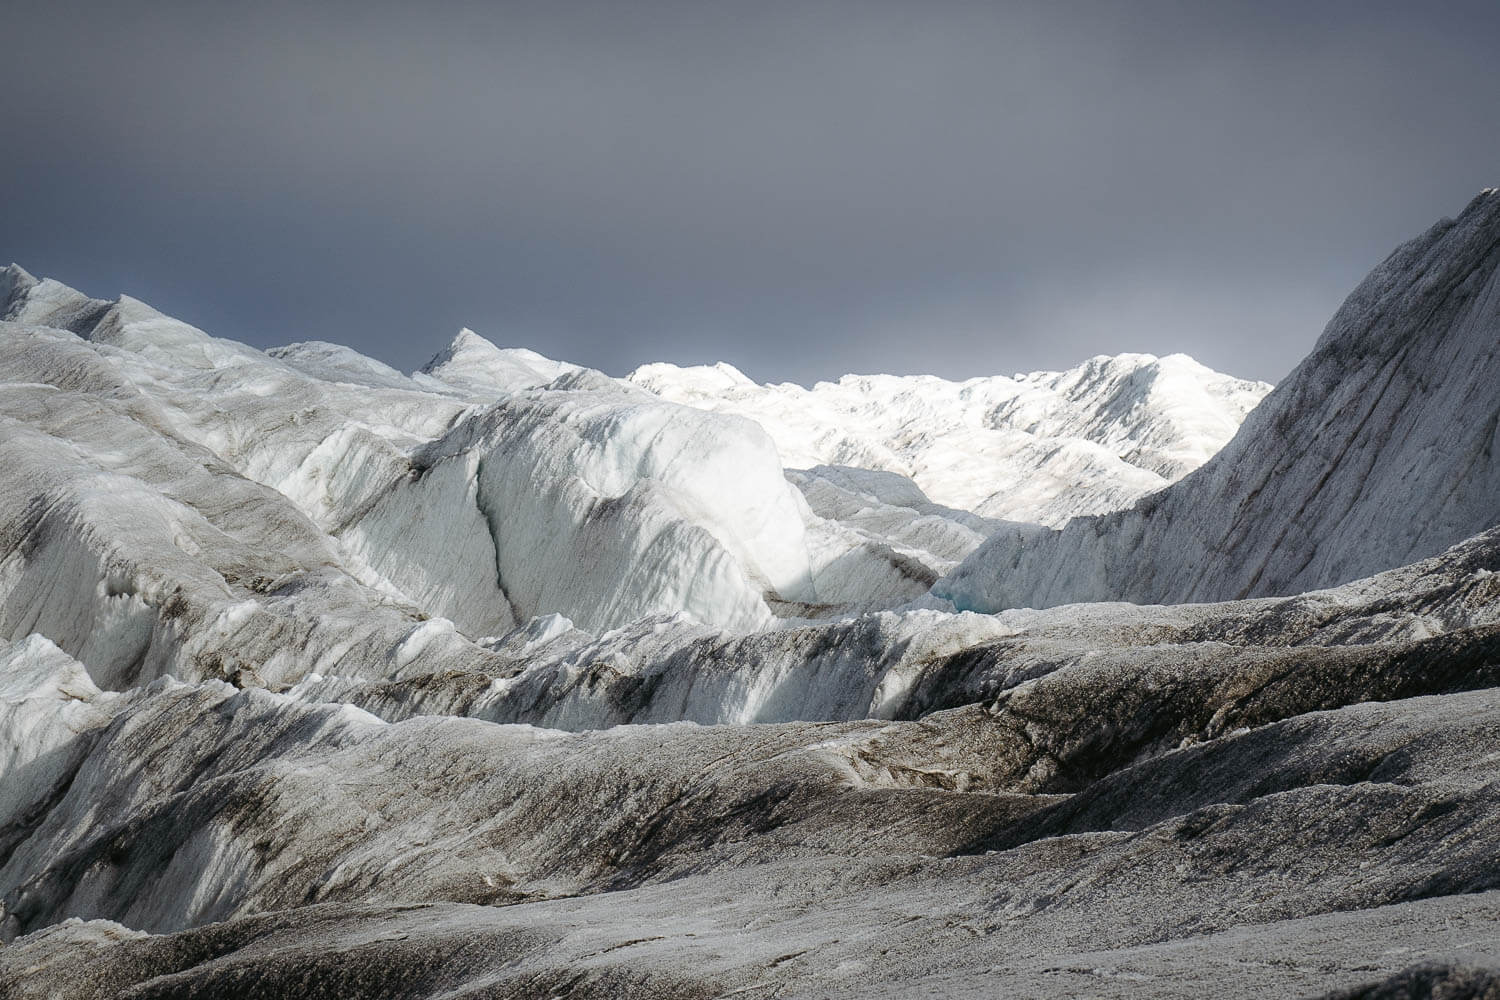 Details of the Aletsch Glacier